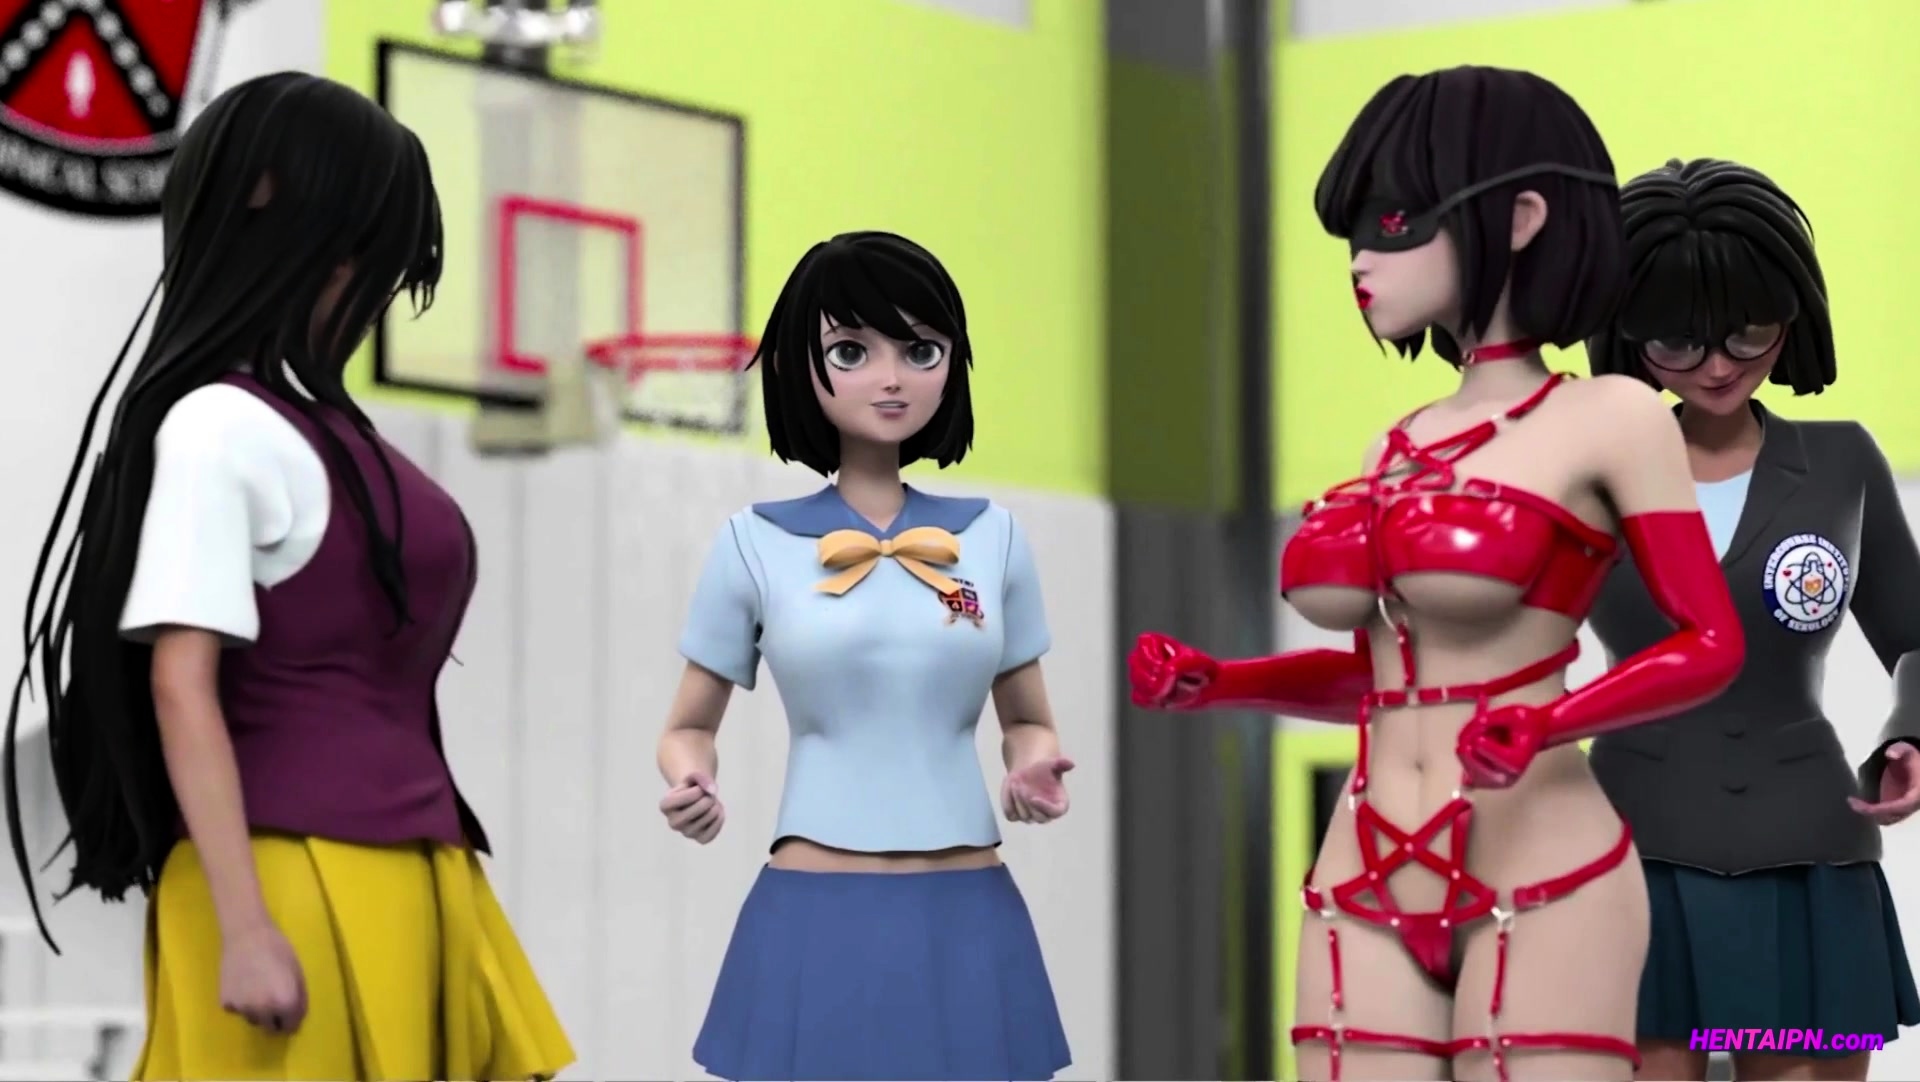 3d Hentai Videos - 3D Hentai Sex School 2nd Semester Ep 03 (ENG Voices) Video at Porn Lib